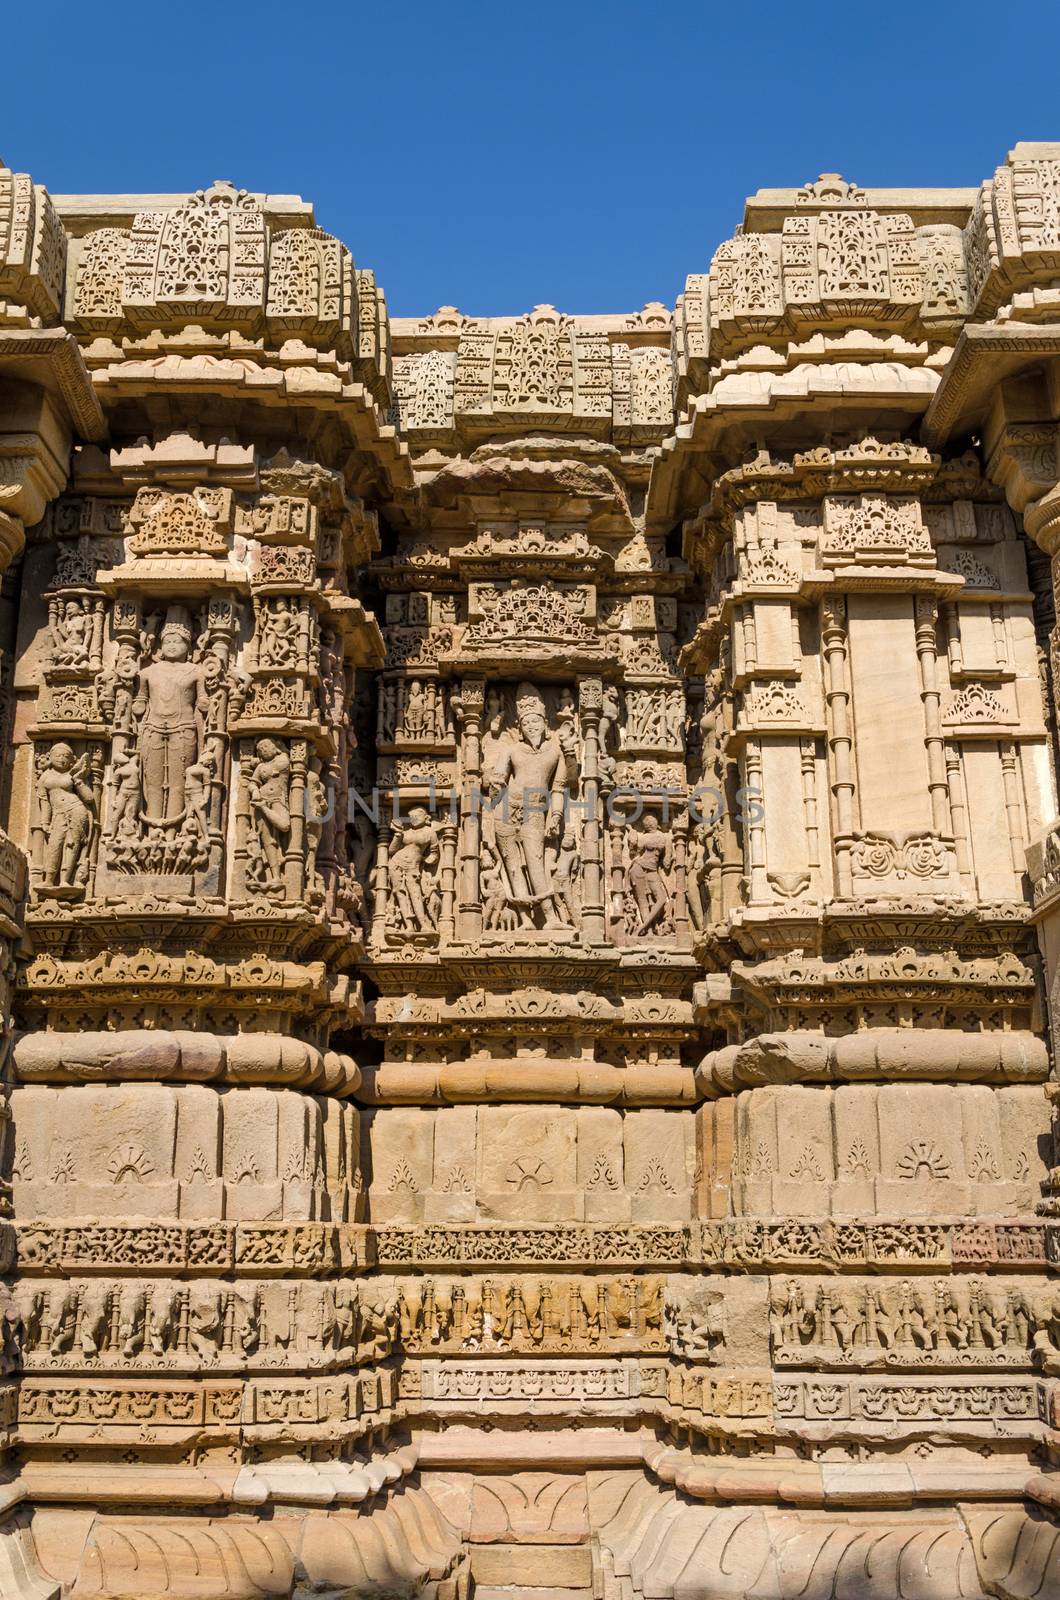 Vintage crafted designs on rocks at Sun Temple Modhera, Ahmedabad, India